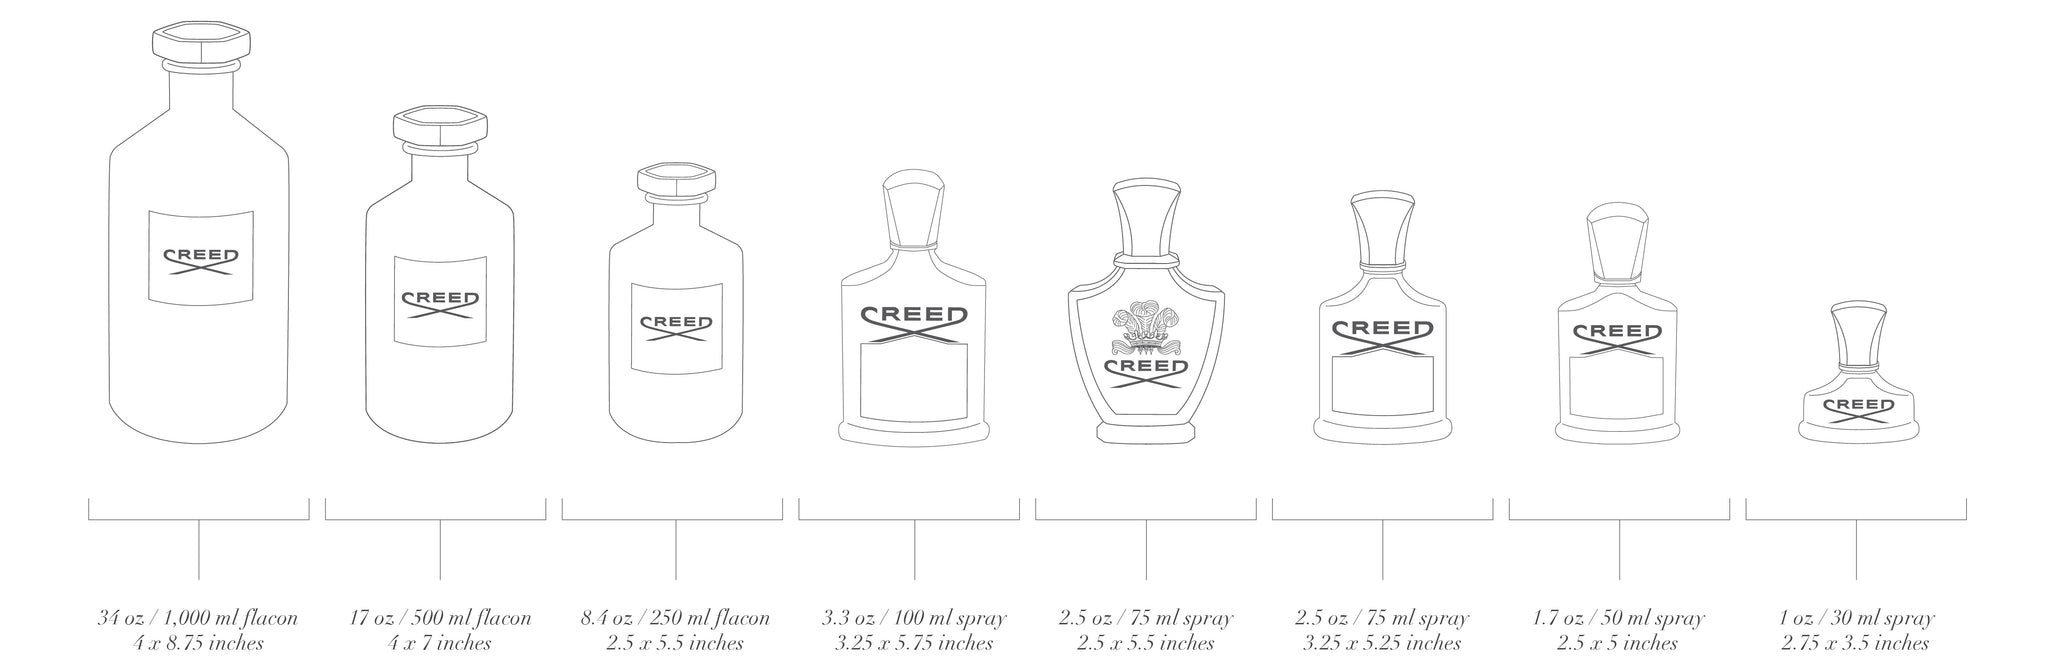 creed perfume bottle